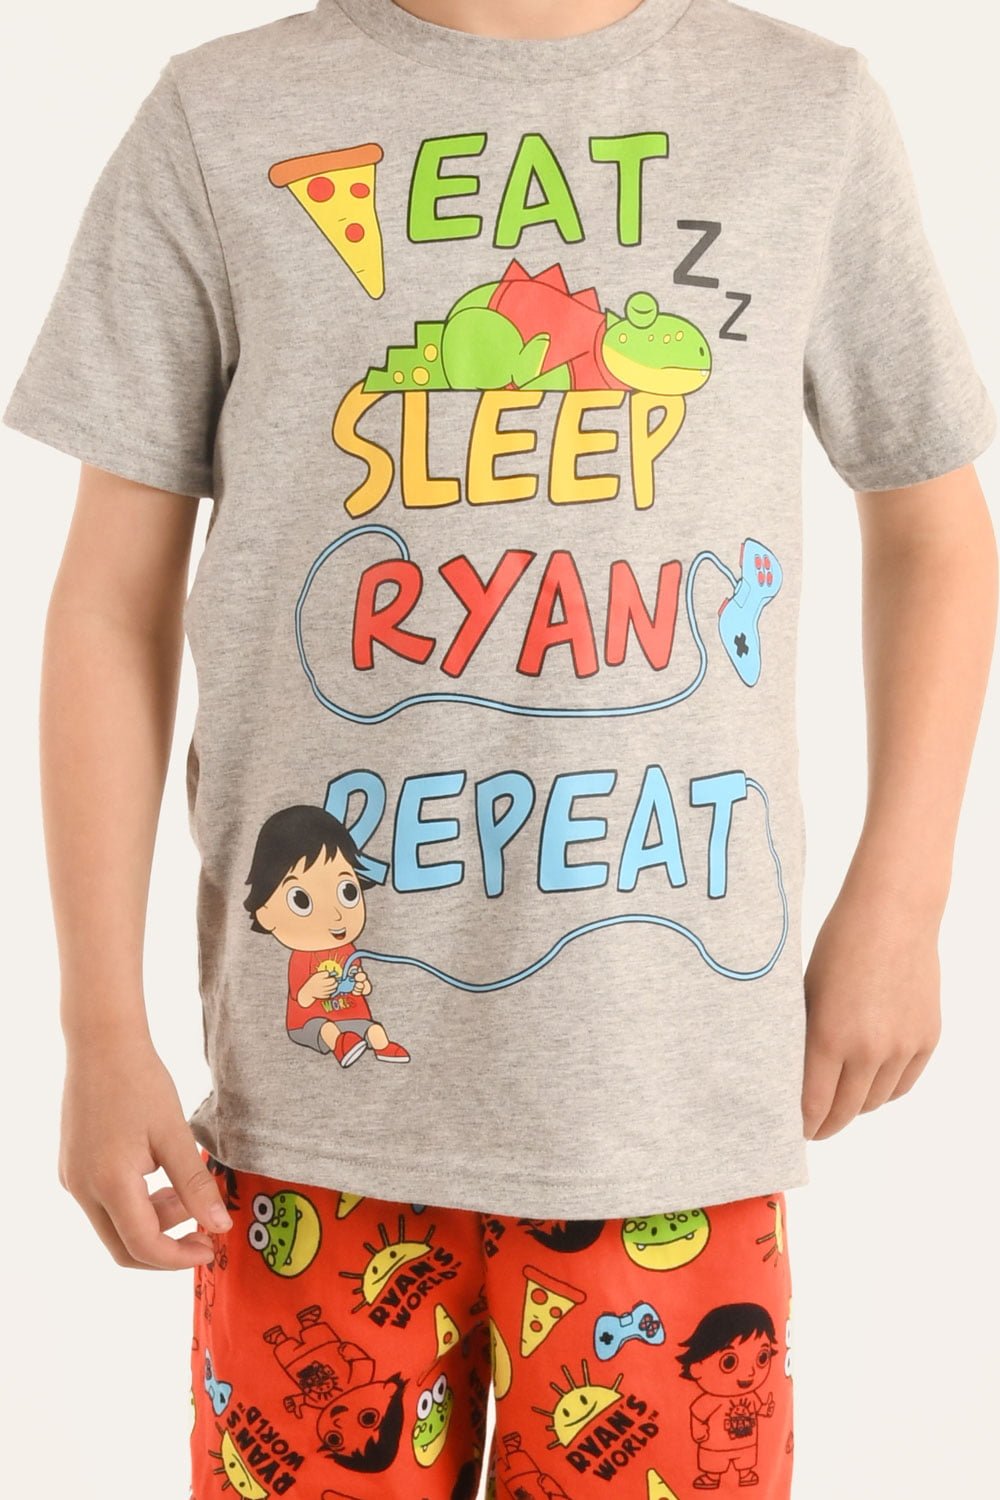 Ryan's World Shortie Pyjamas - Brand Threads